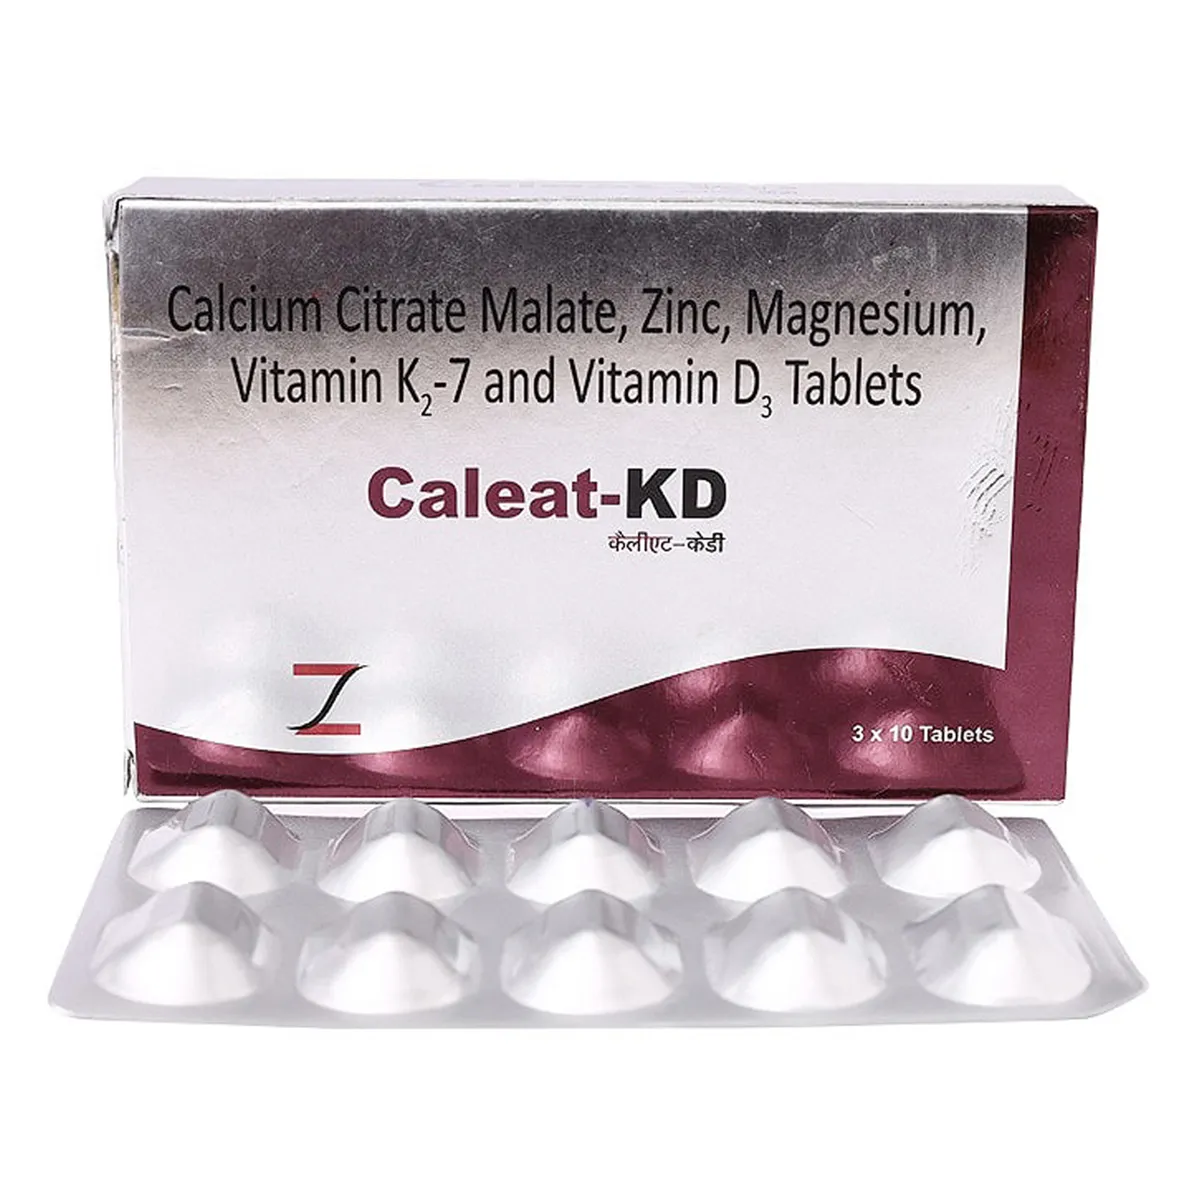 Caleat-KD Tablet